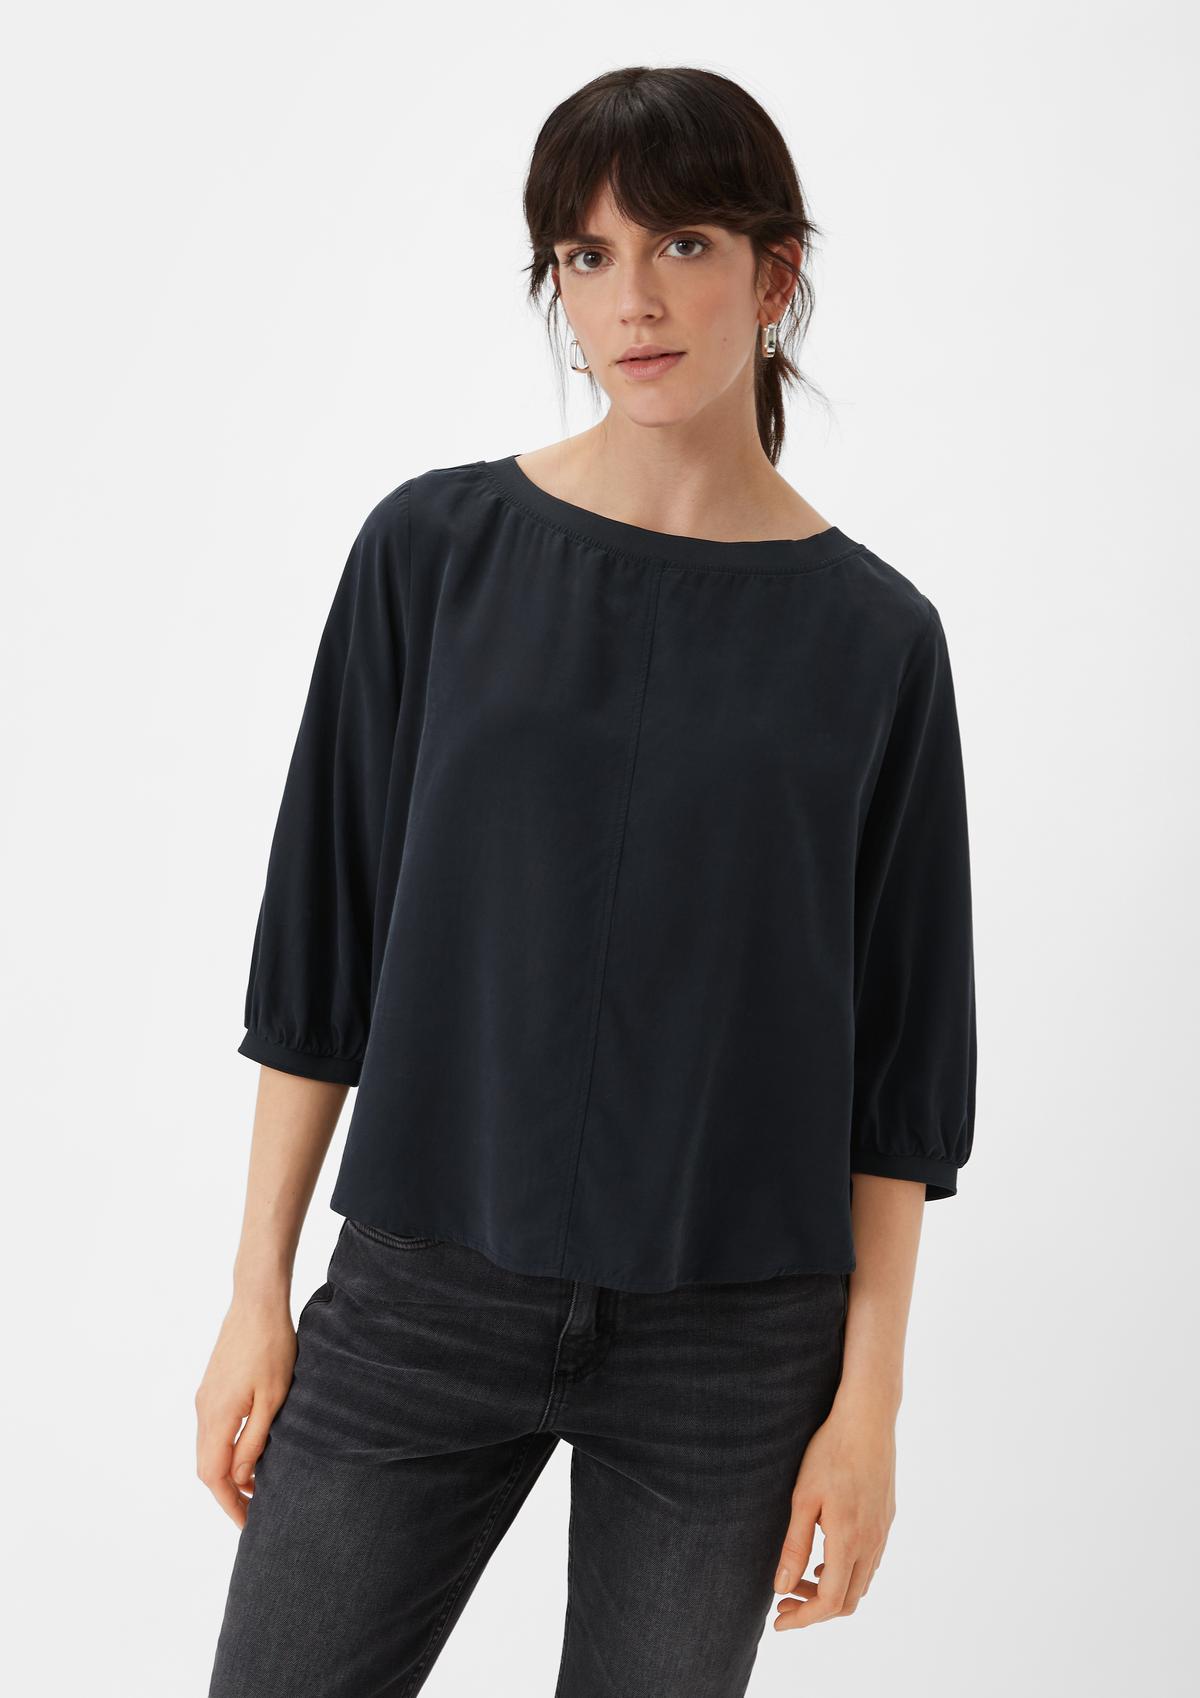 3/4-length sleeve blouse made of modal